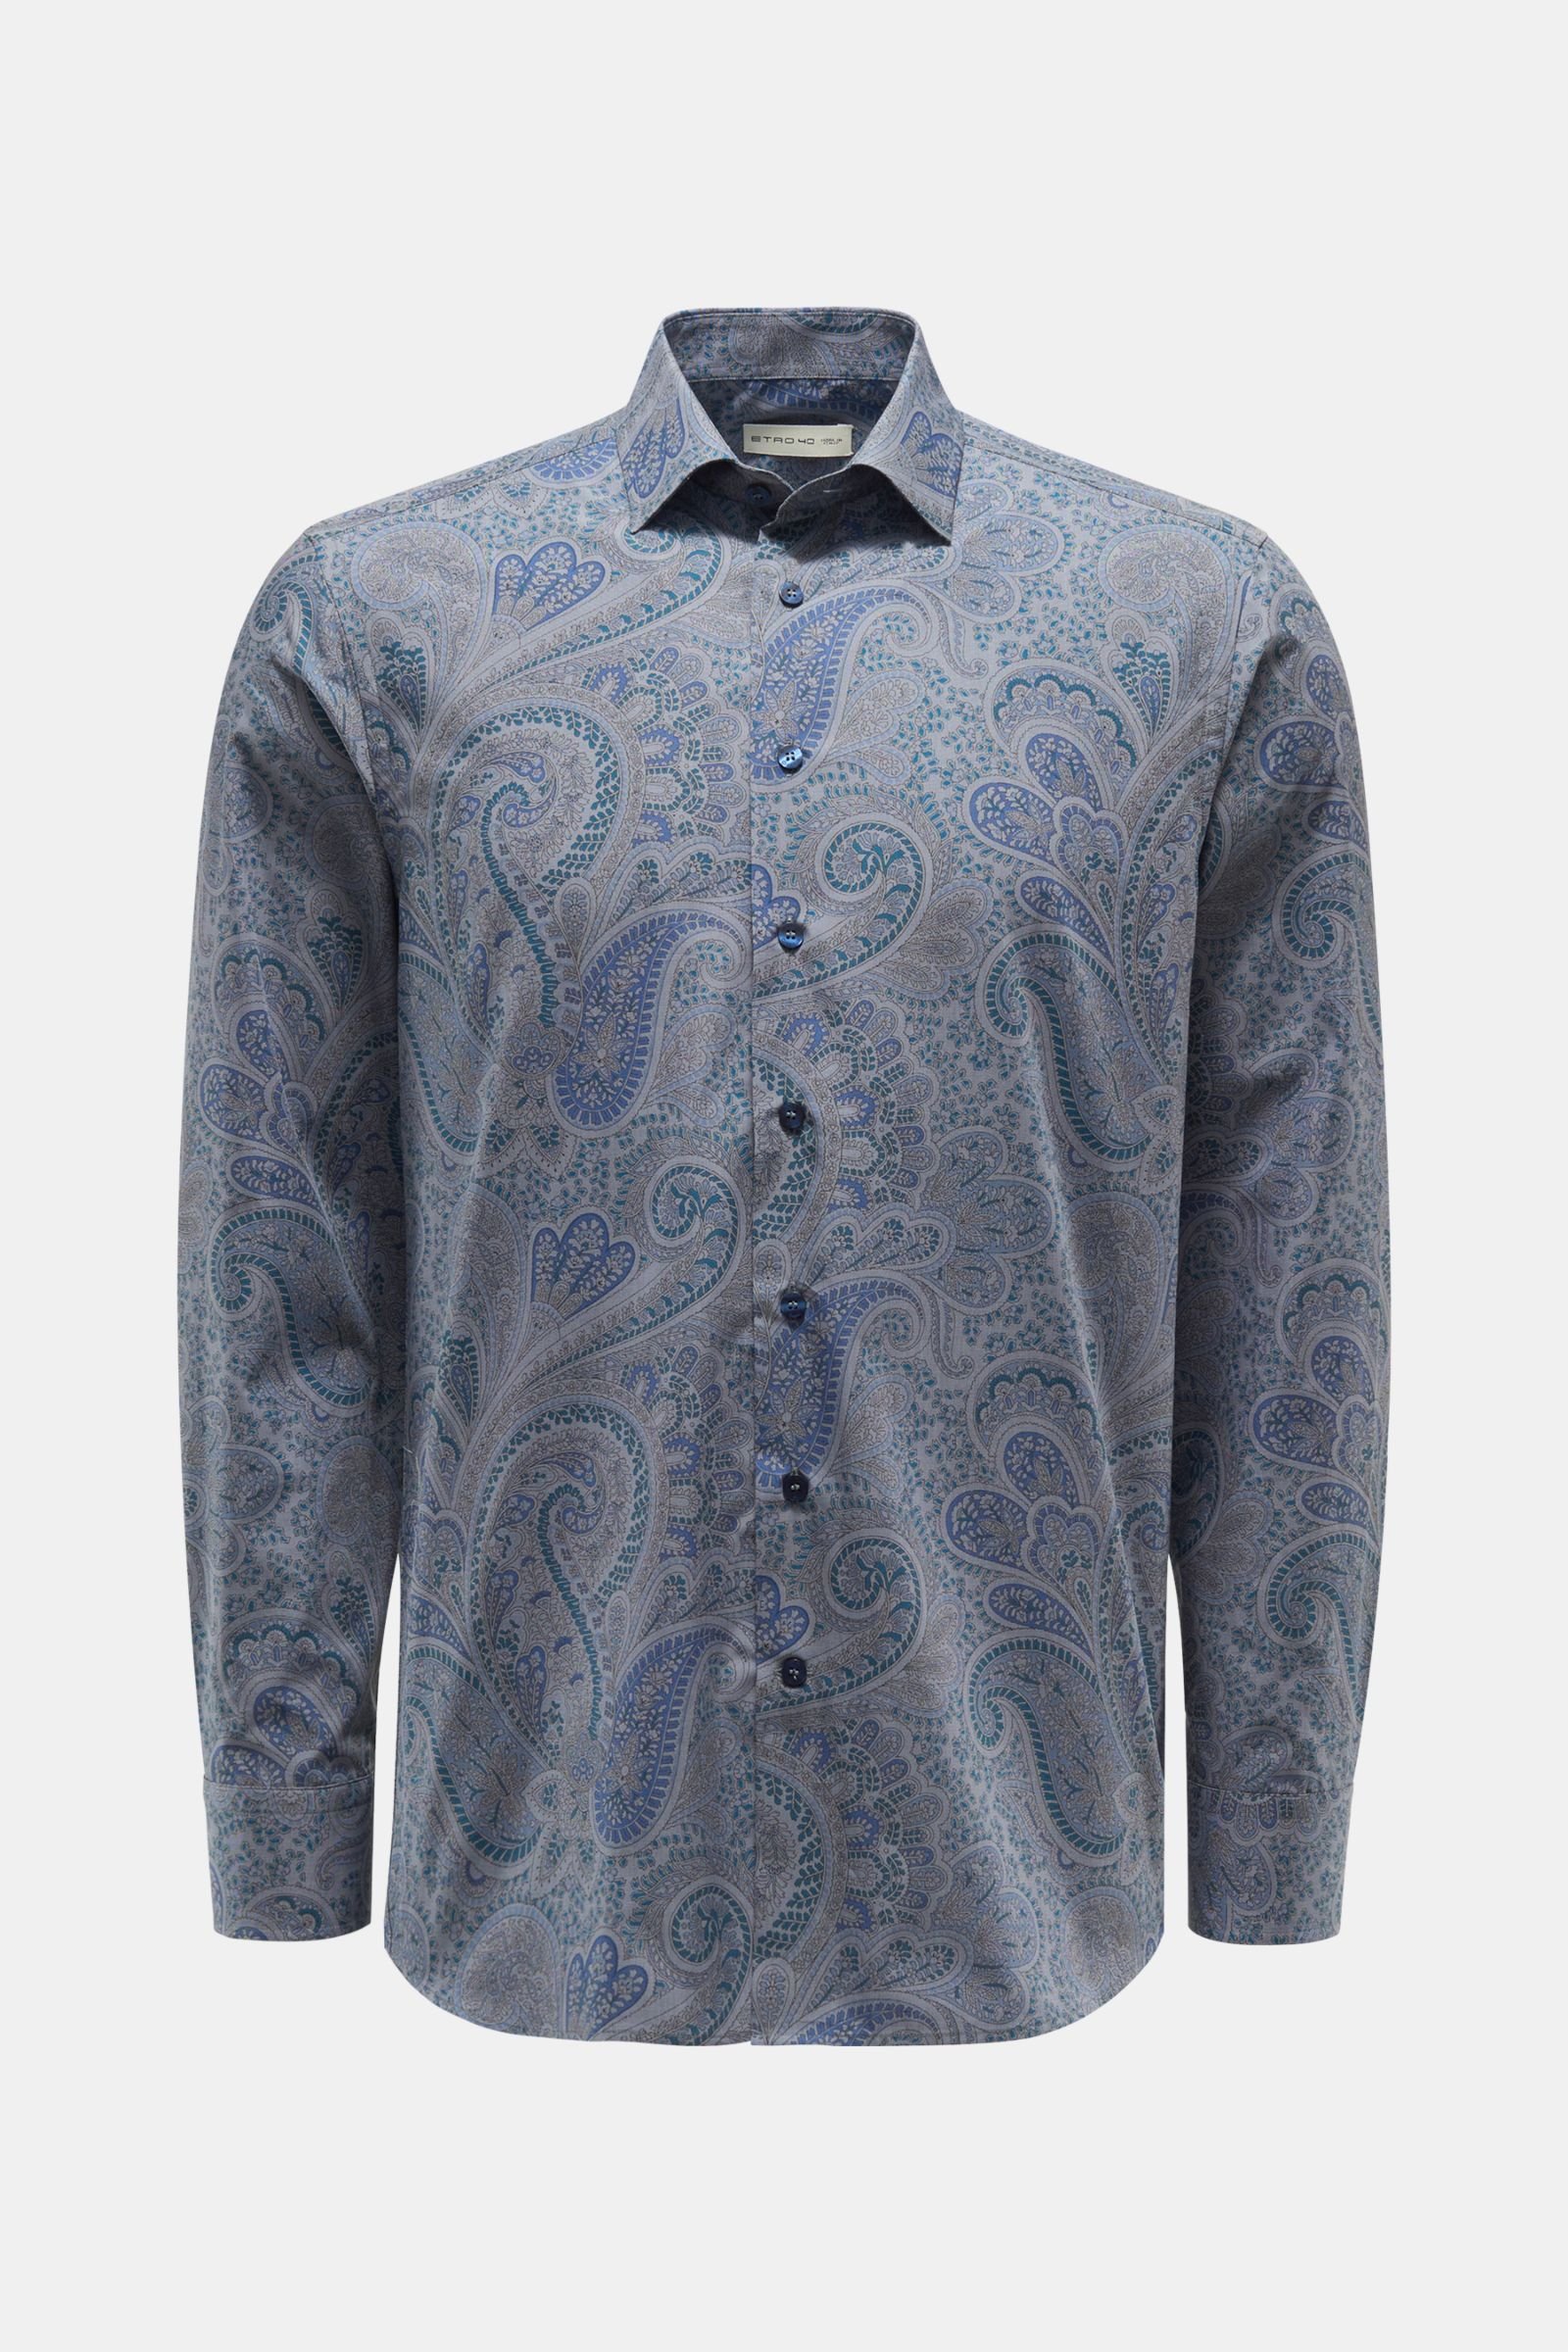 Casual shirt slim collar grey-blue patterned